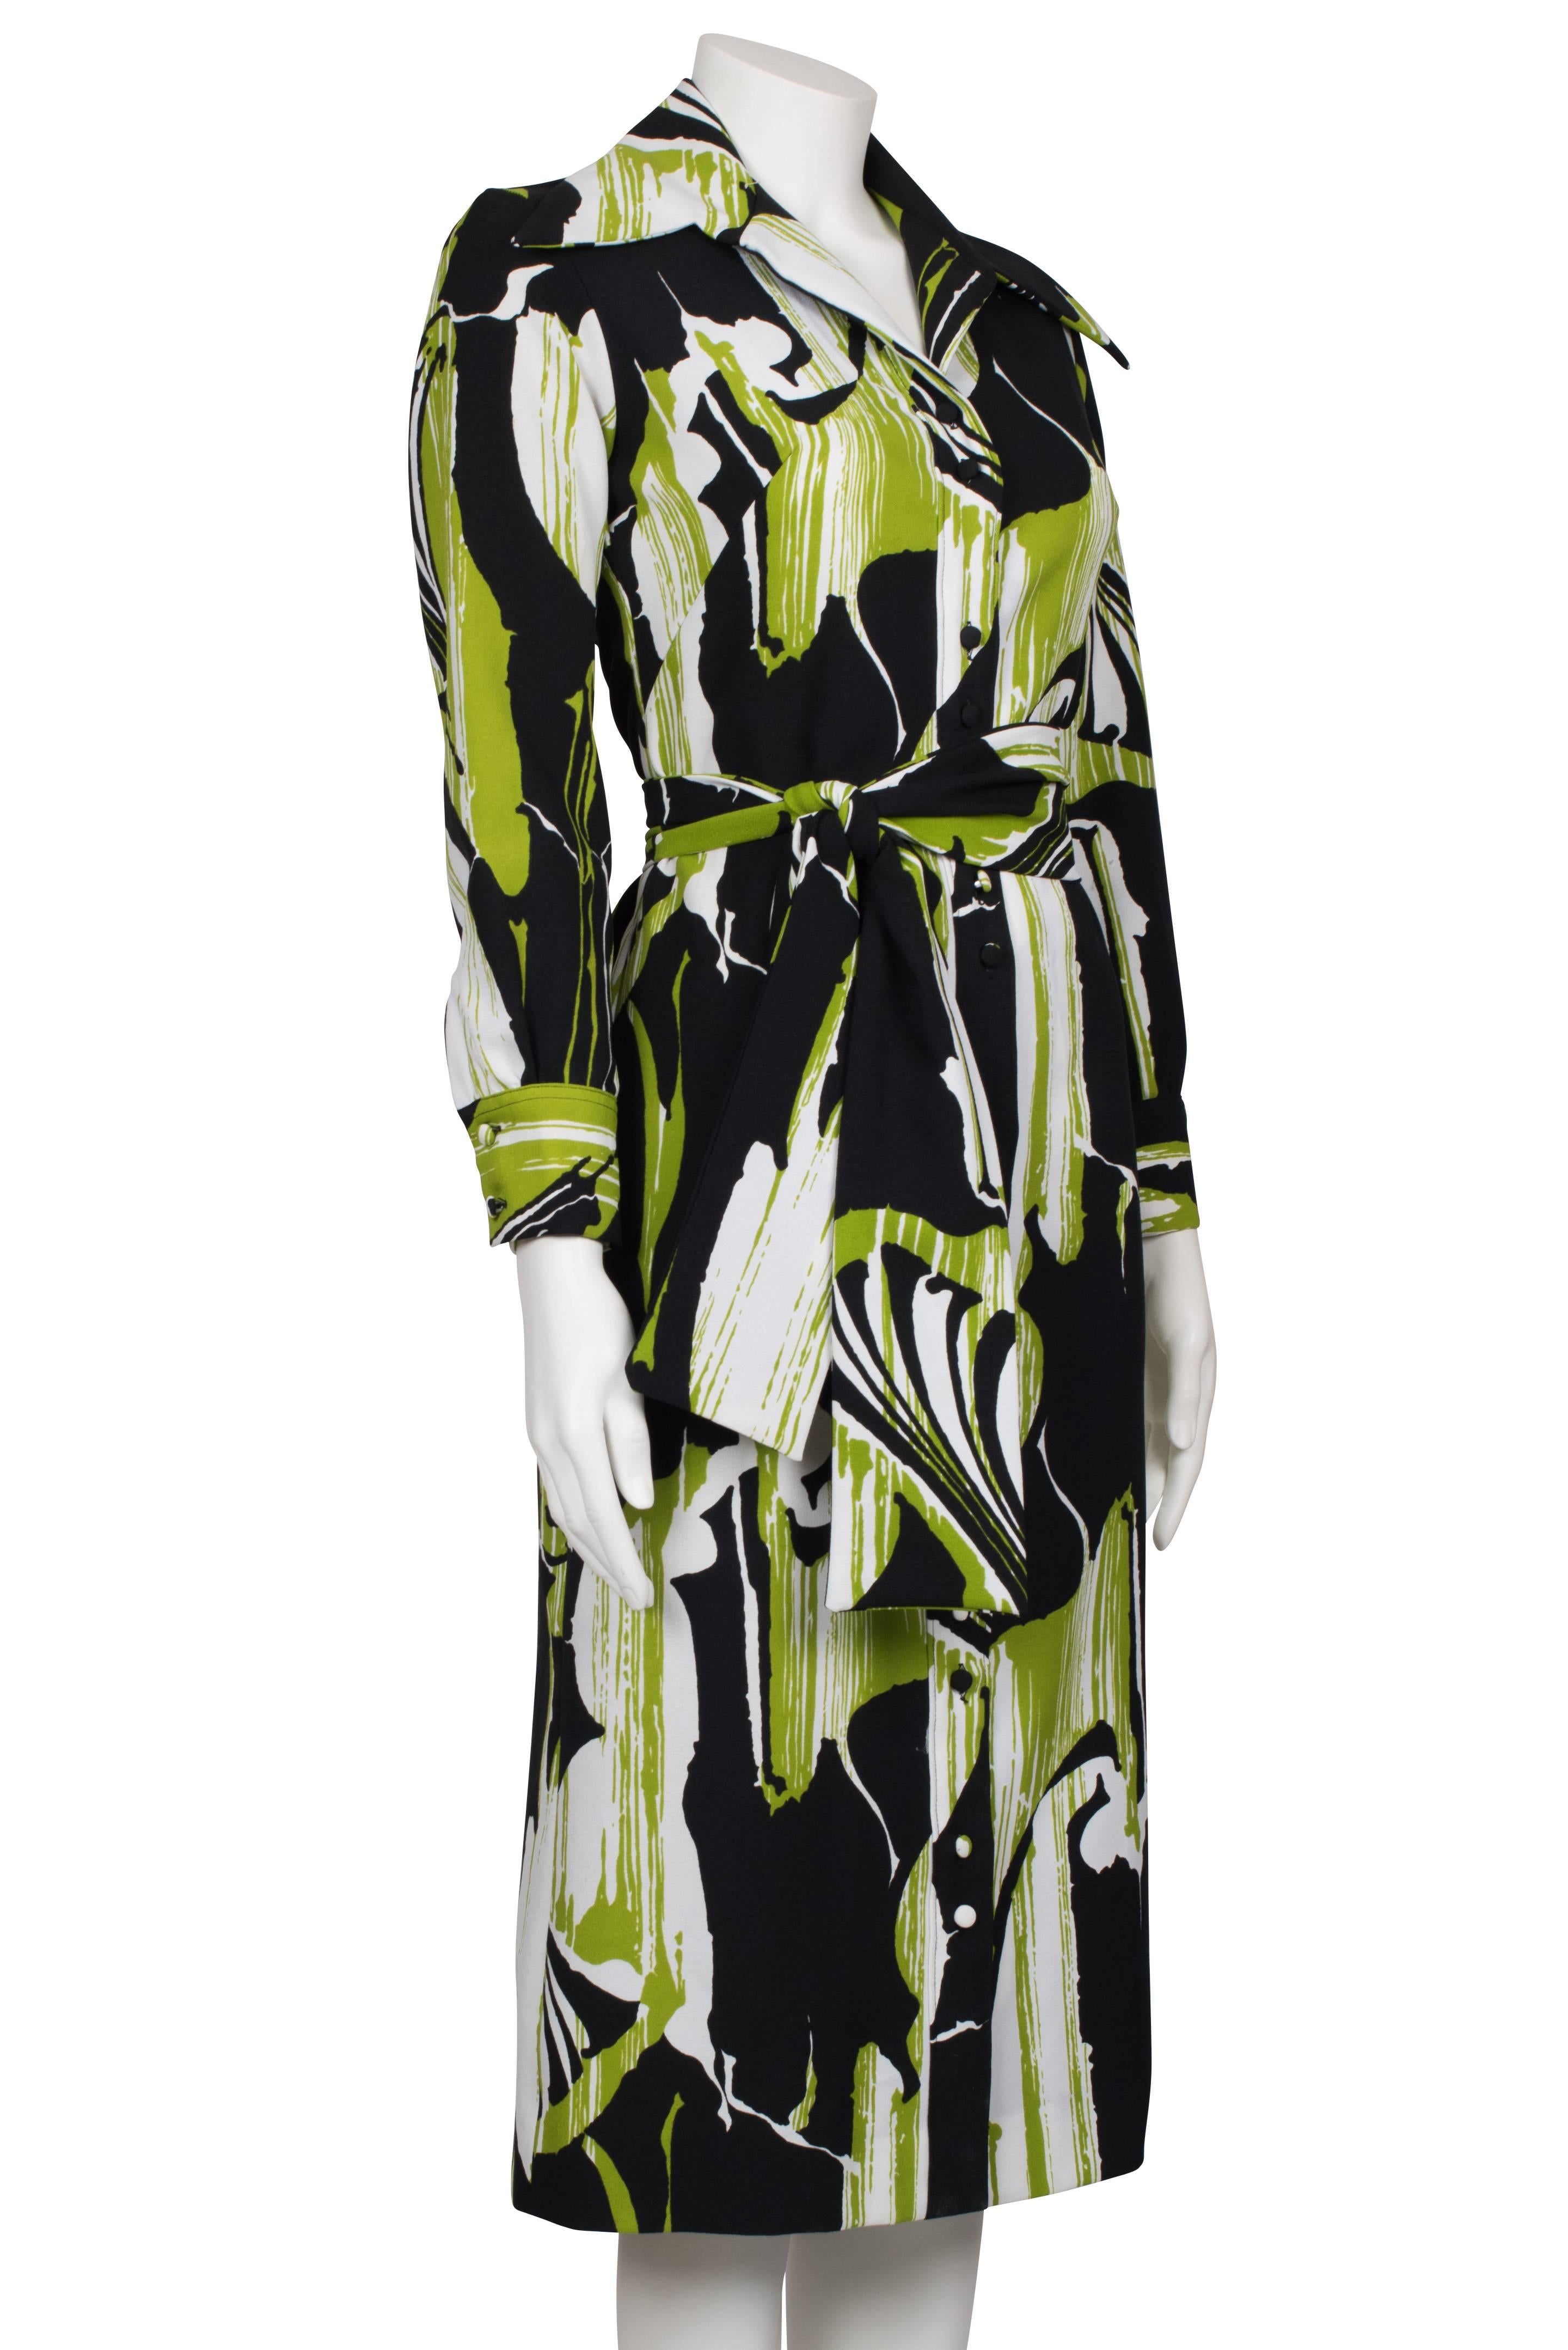 Women's 1970s Lime White & Black Abstract Print Lanvin Shirt Dress For Sale